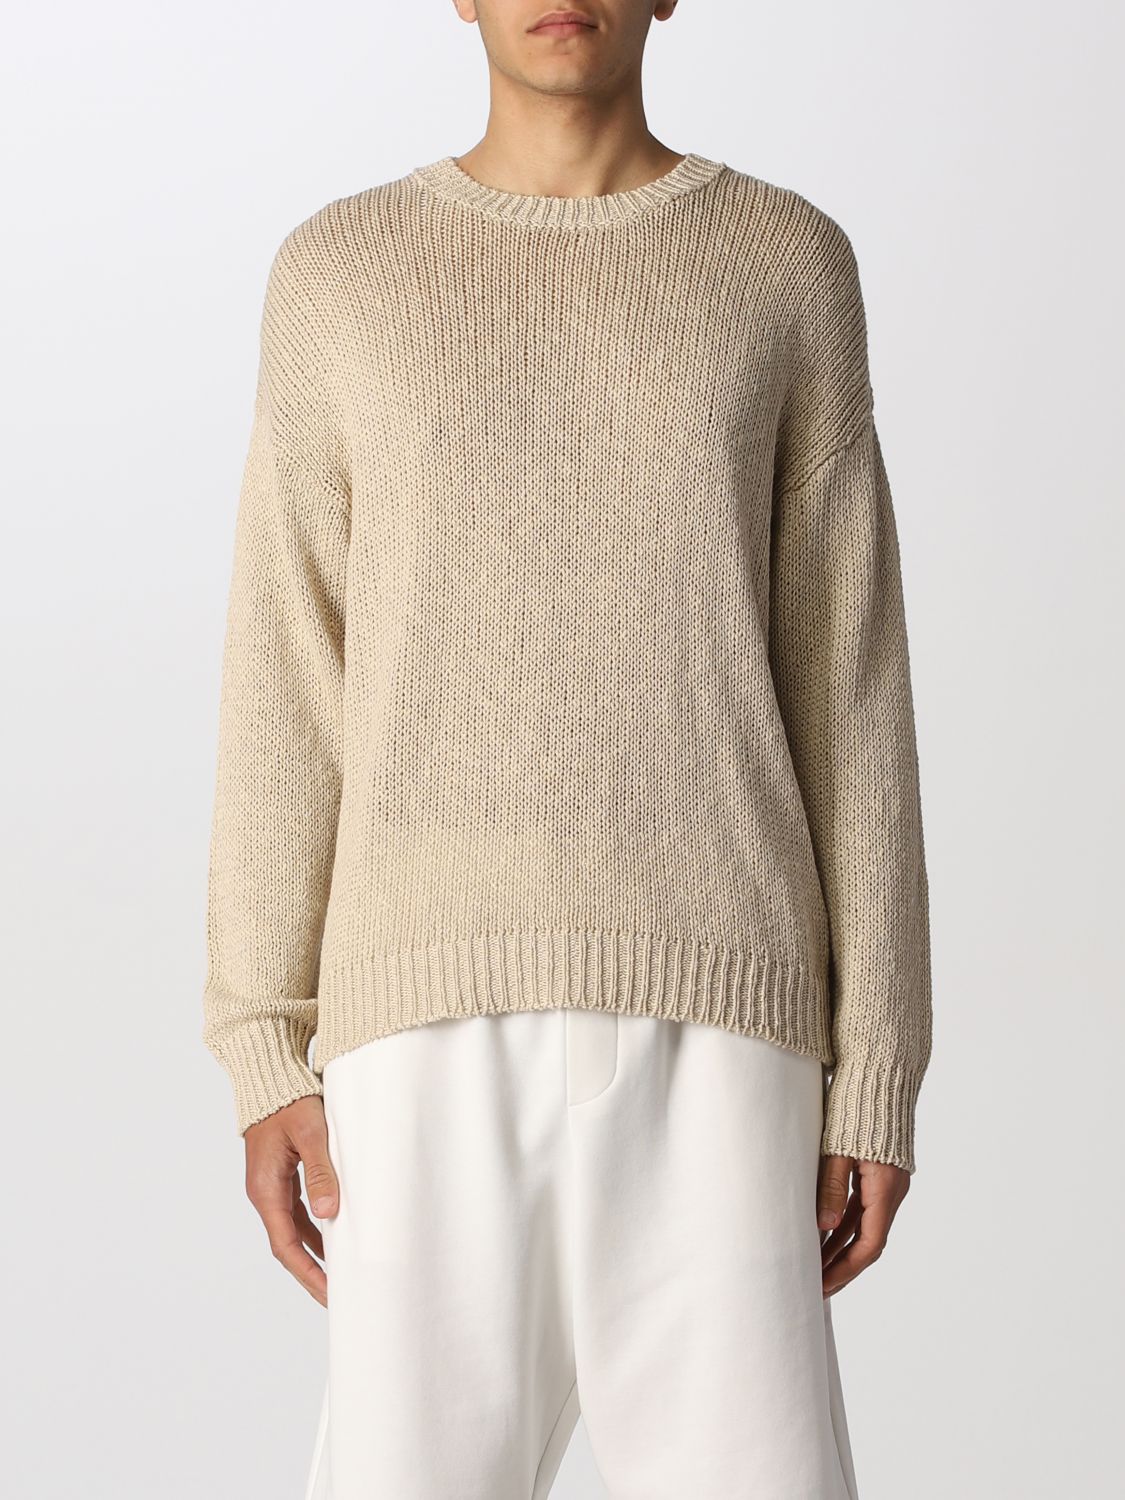 ROBERTO COLLINA: sweater for man - Beige | Roberto Collina sweater ...